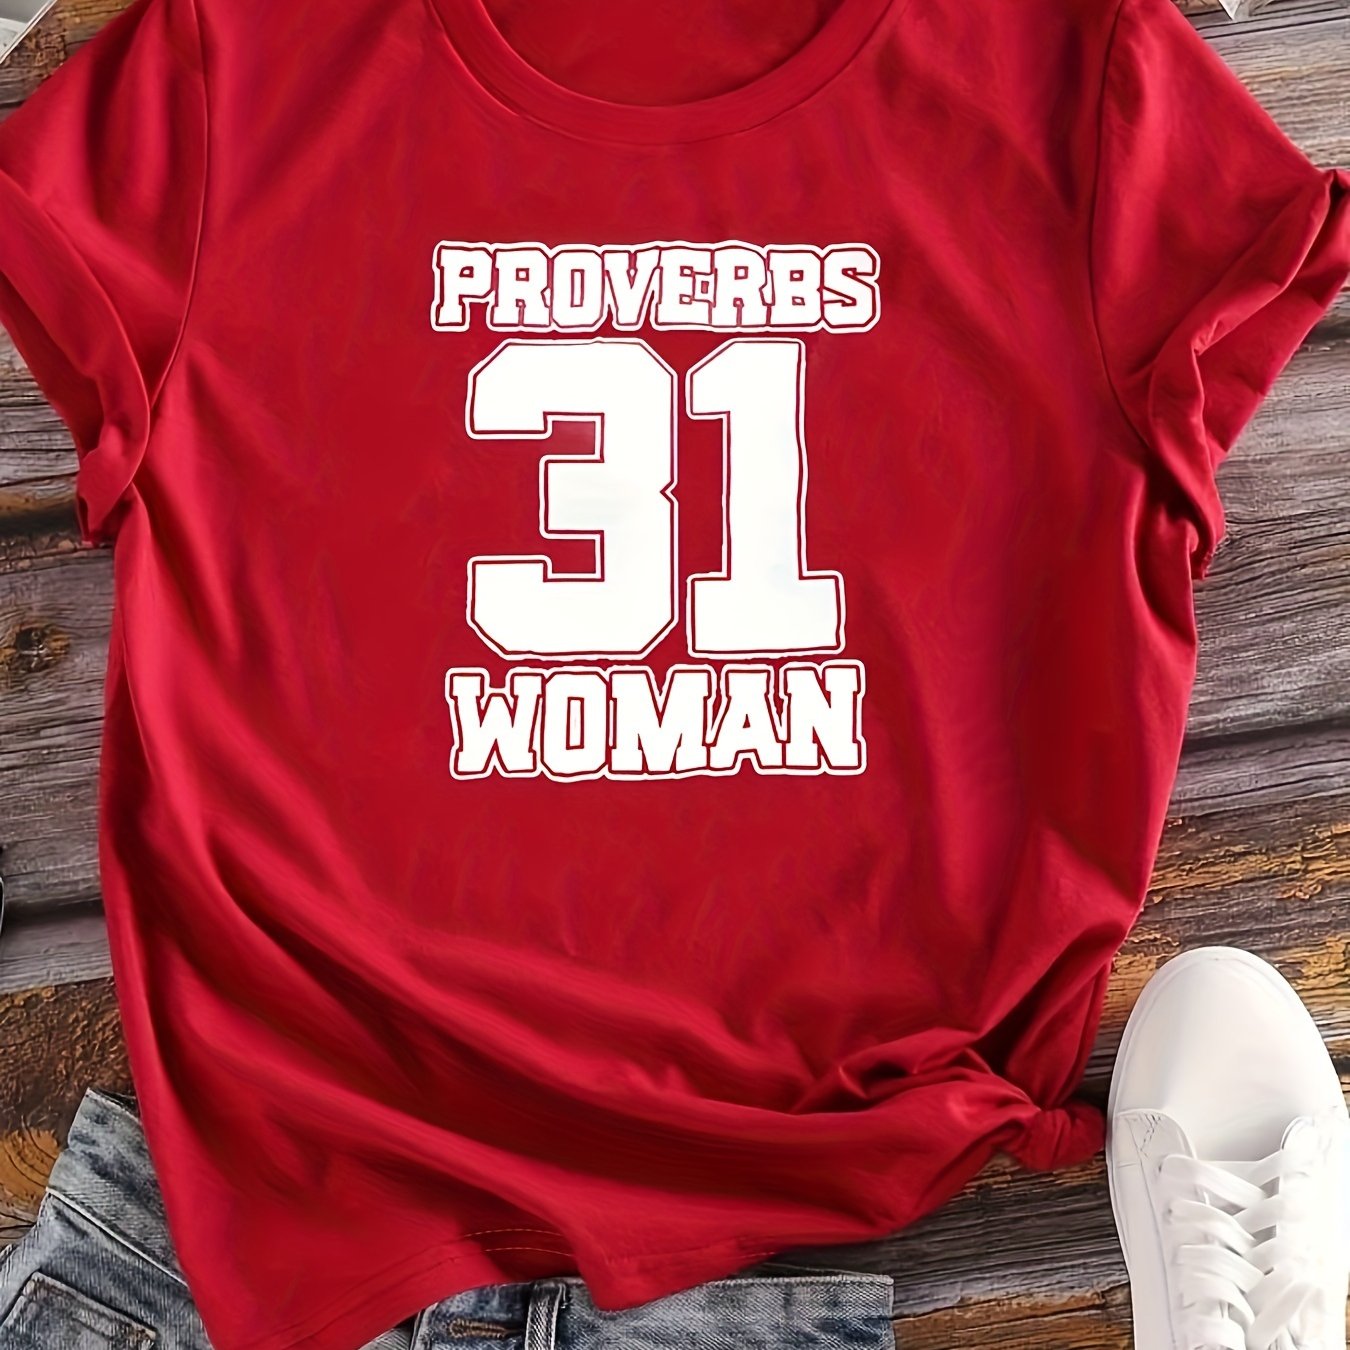 Proverbs 31 Woman Women's Christian T-shirt claimedbygoddesigns